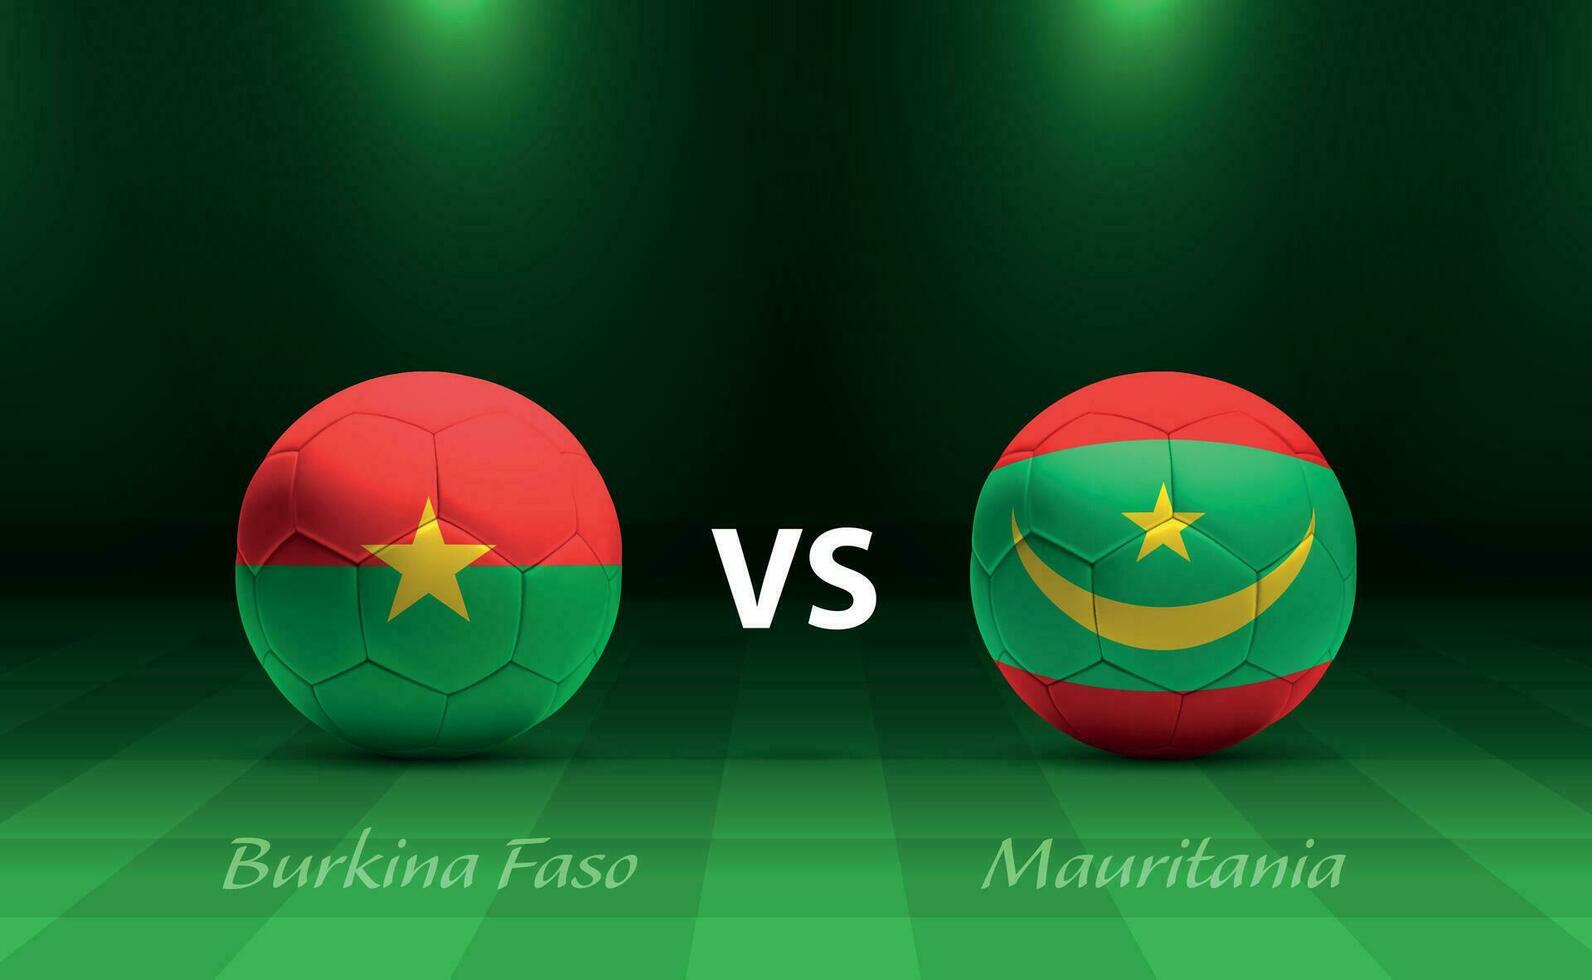 burkina faso contre Mauritanie Football tableau de bord diffuser modèle vecteur